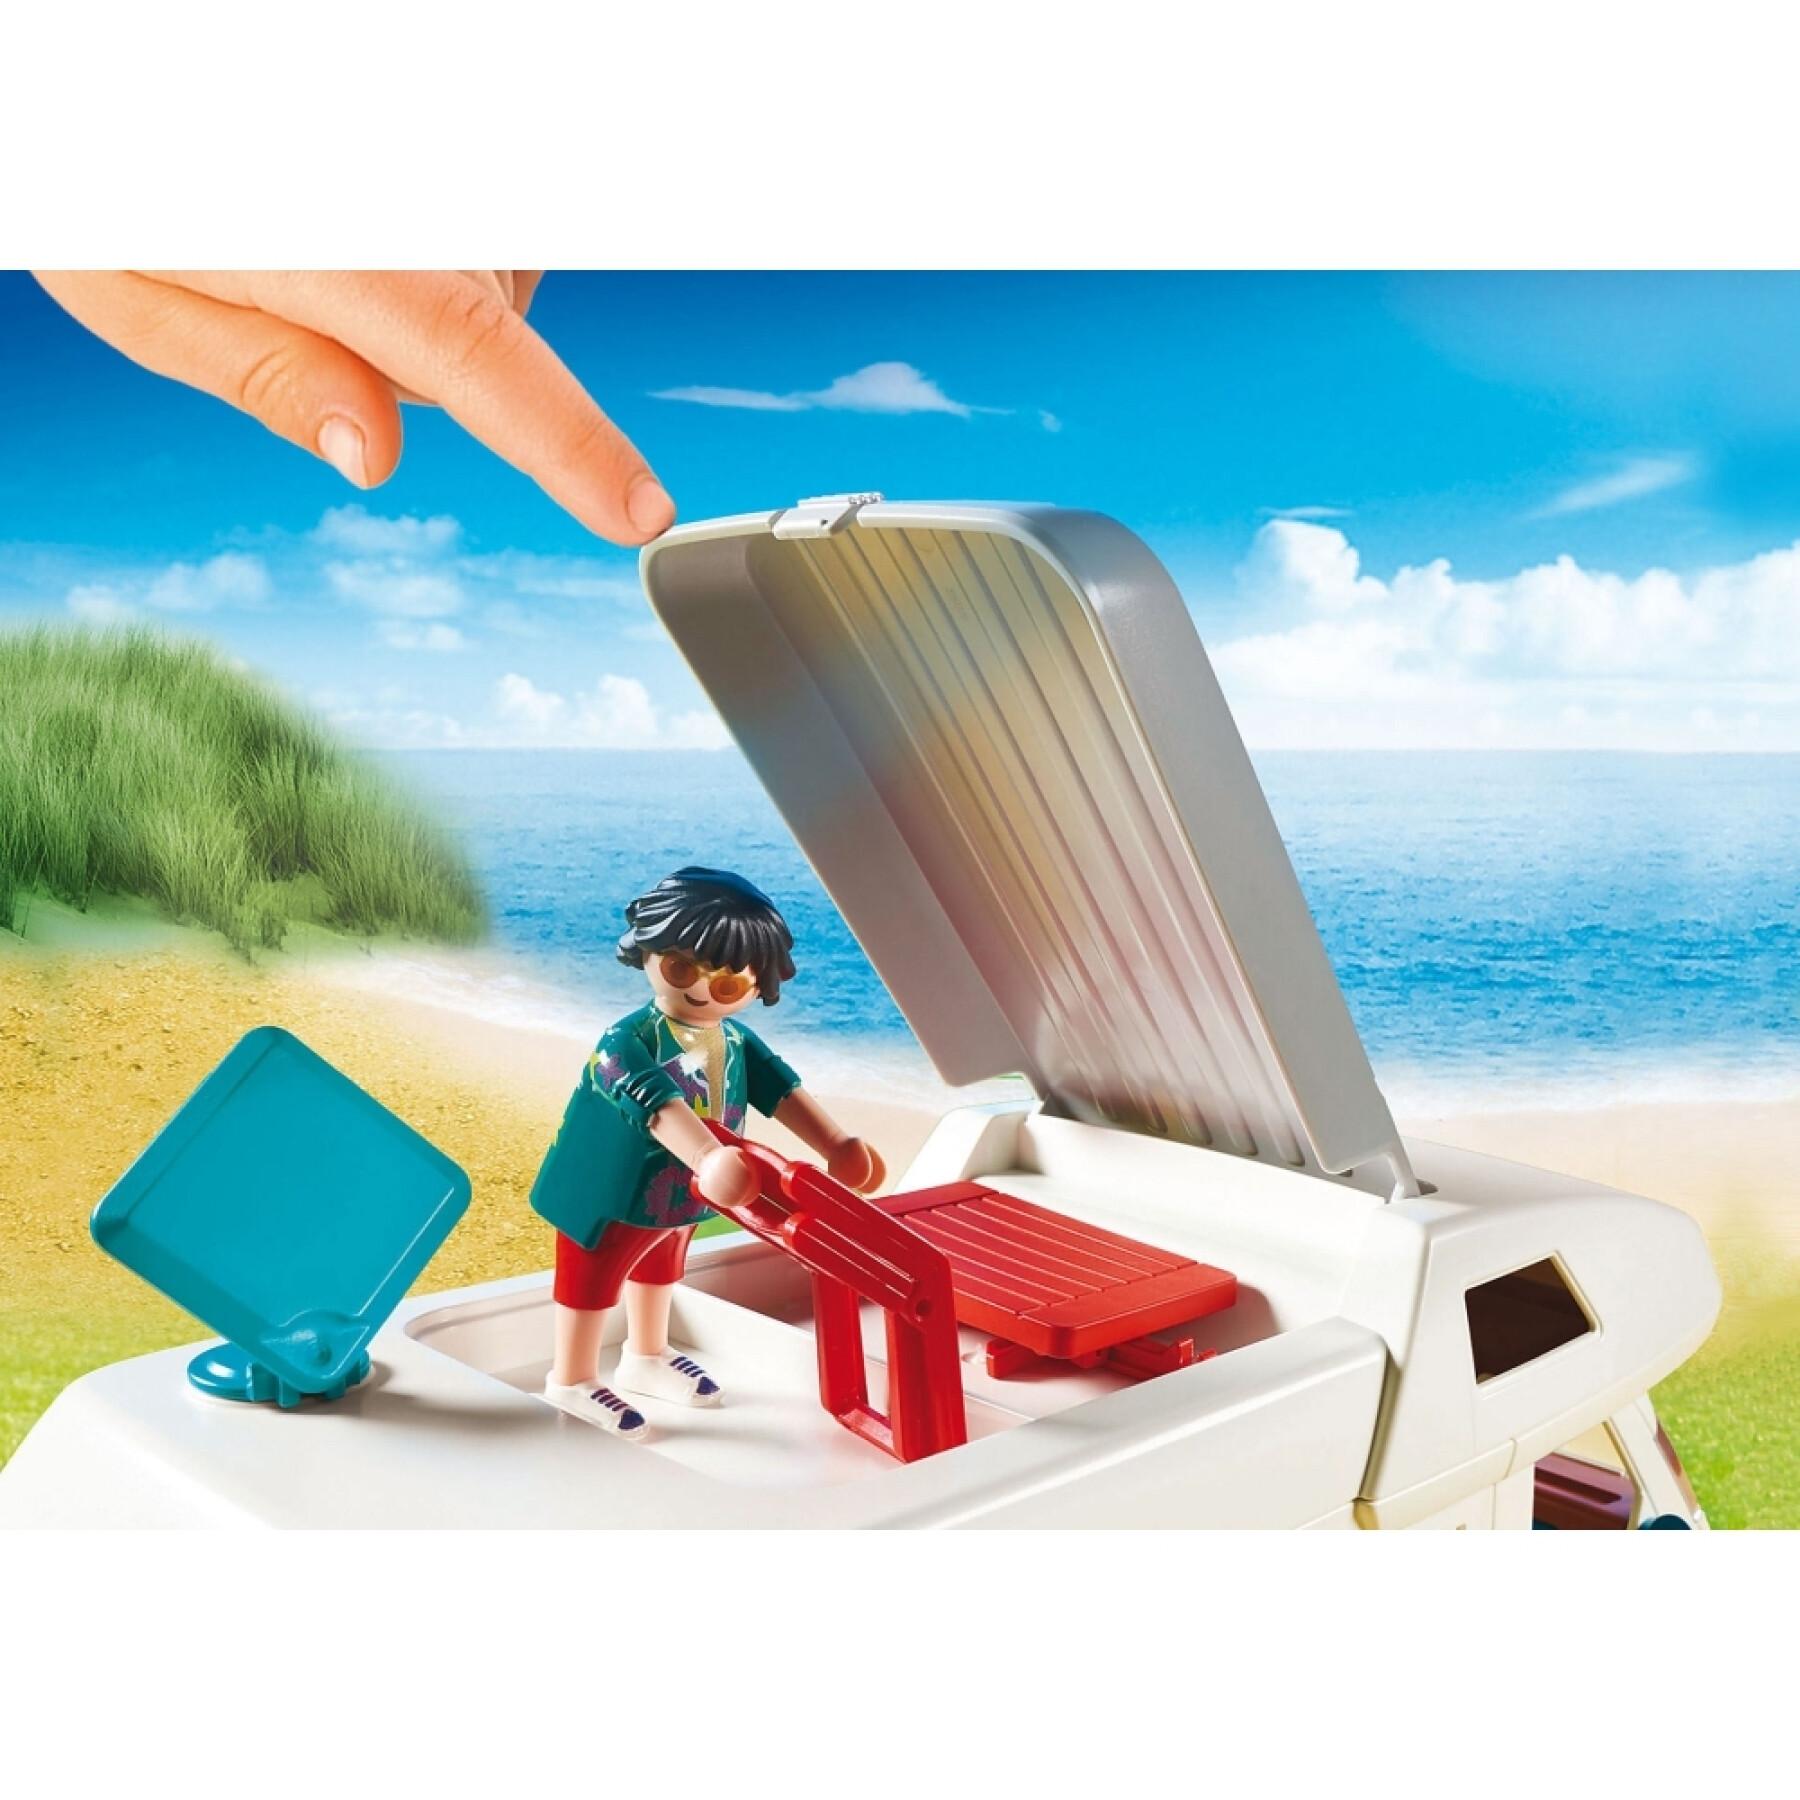 Summer caravan family Playmobil